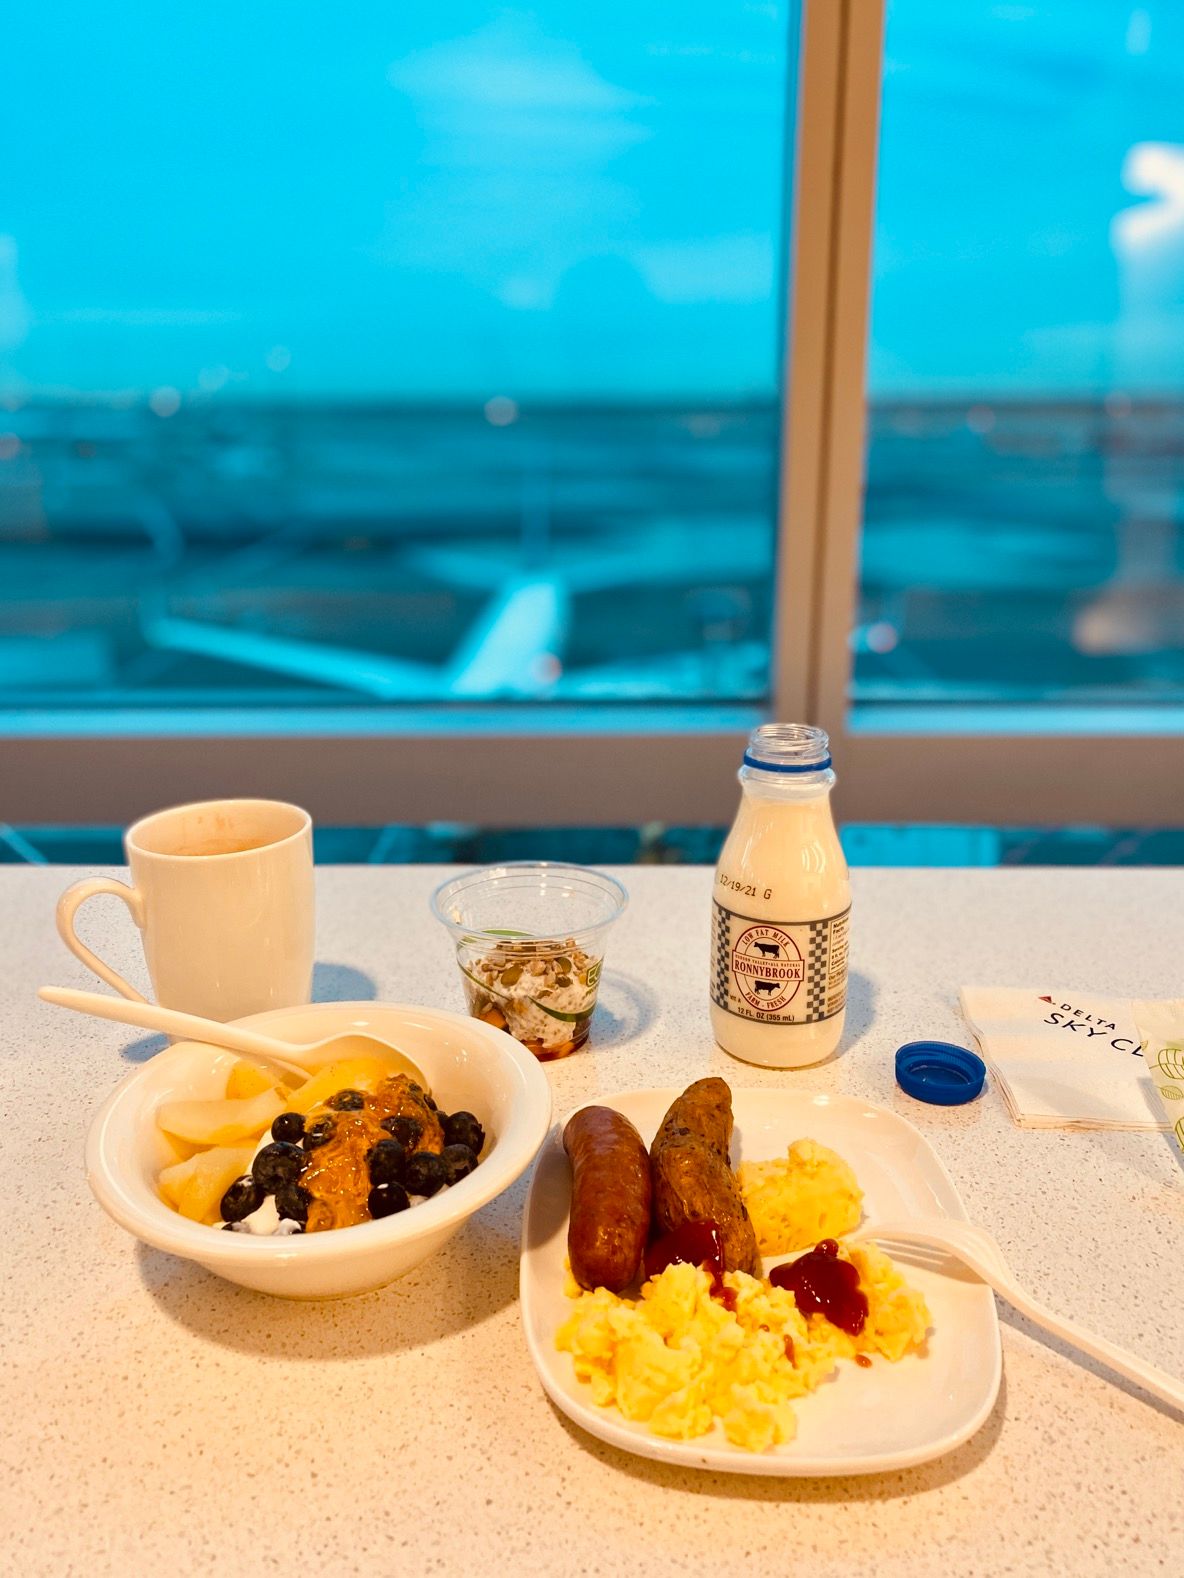 Breakfast with a view @ Delta Sky Club T4 (JFK)